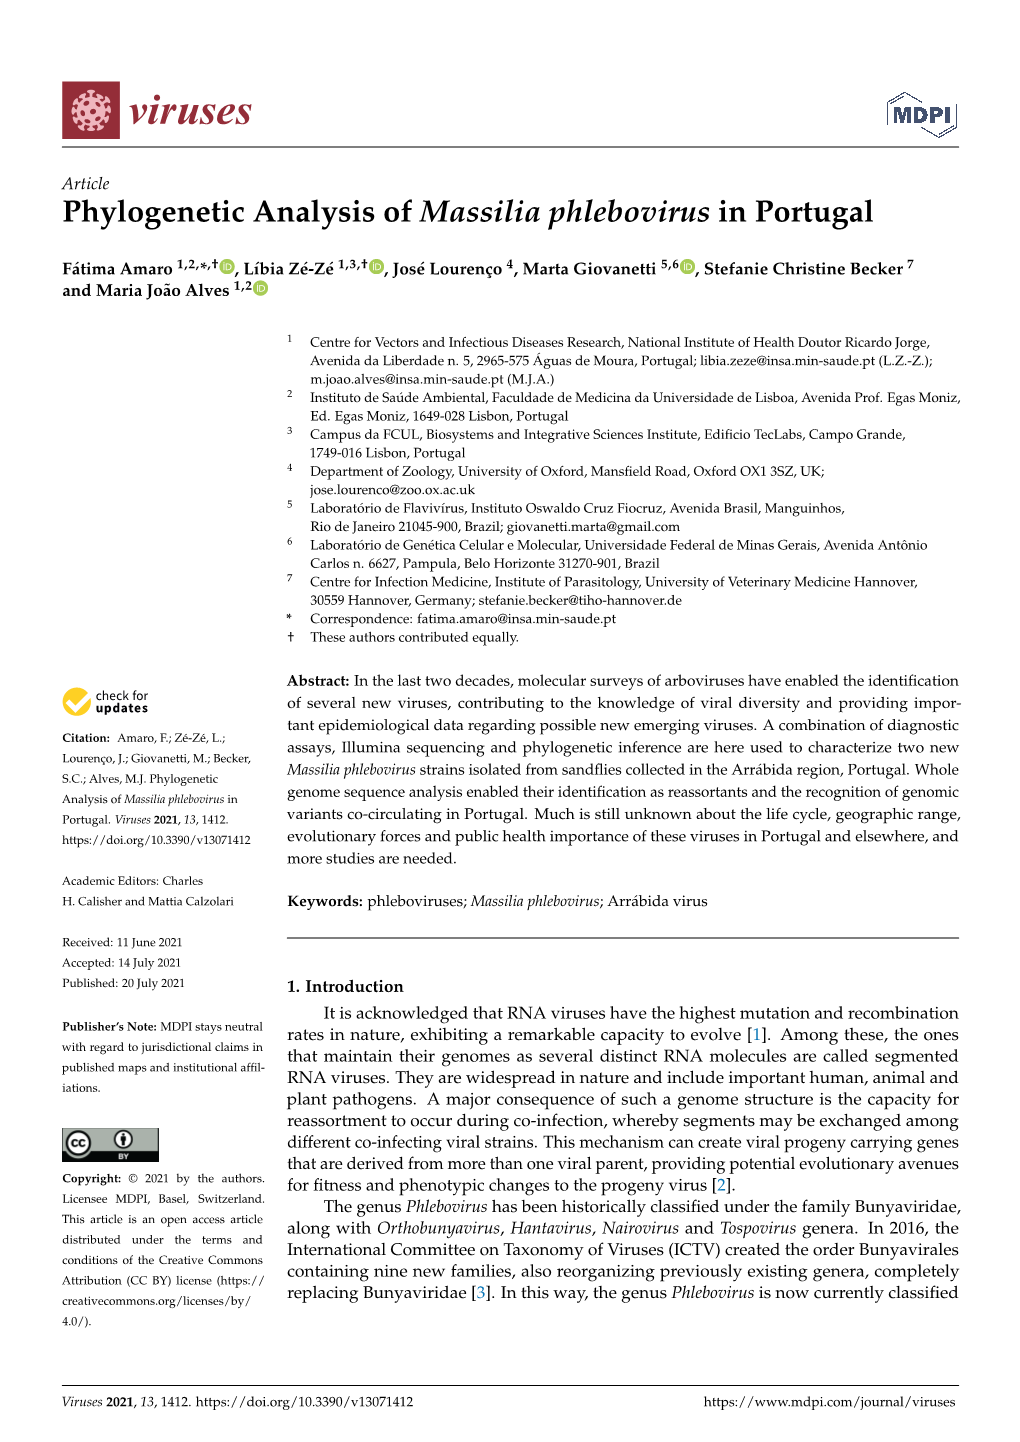 Phylogenetic Analysis of Massilia Phlebovirus in Portugal